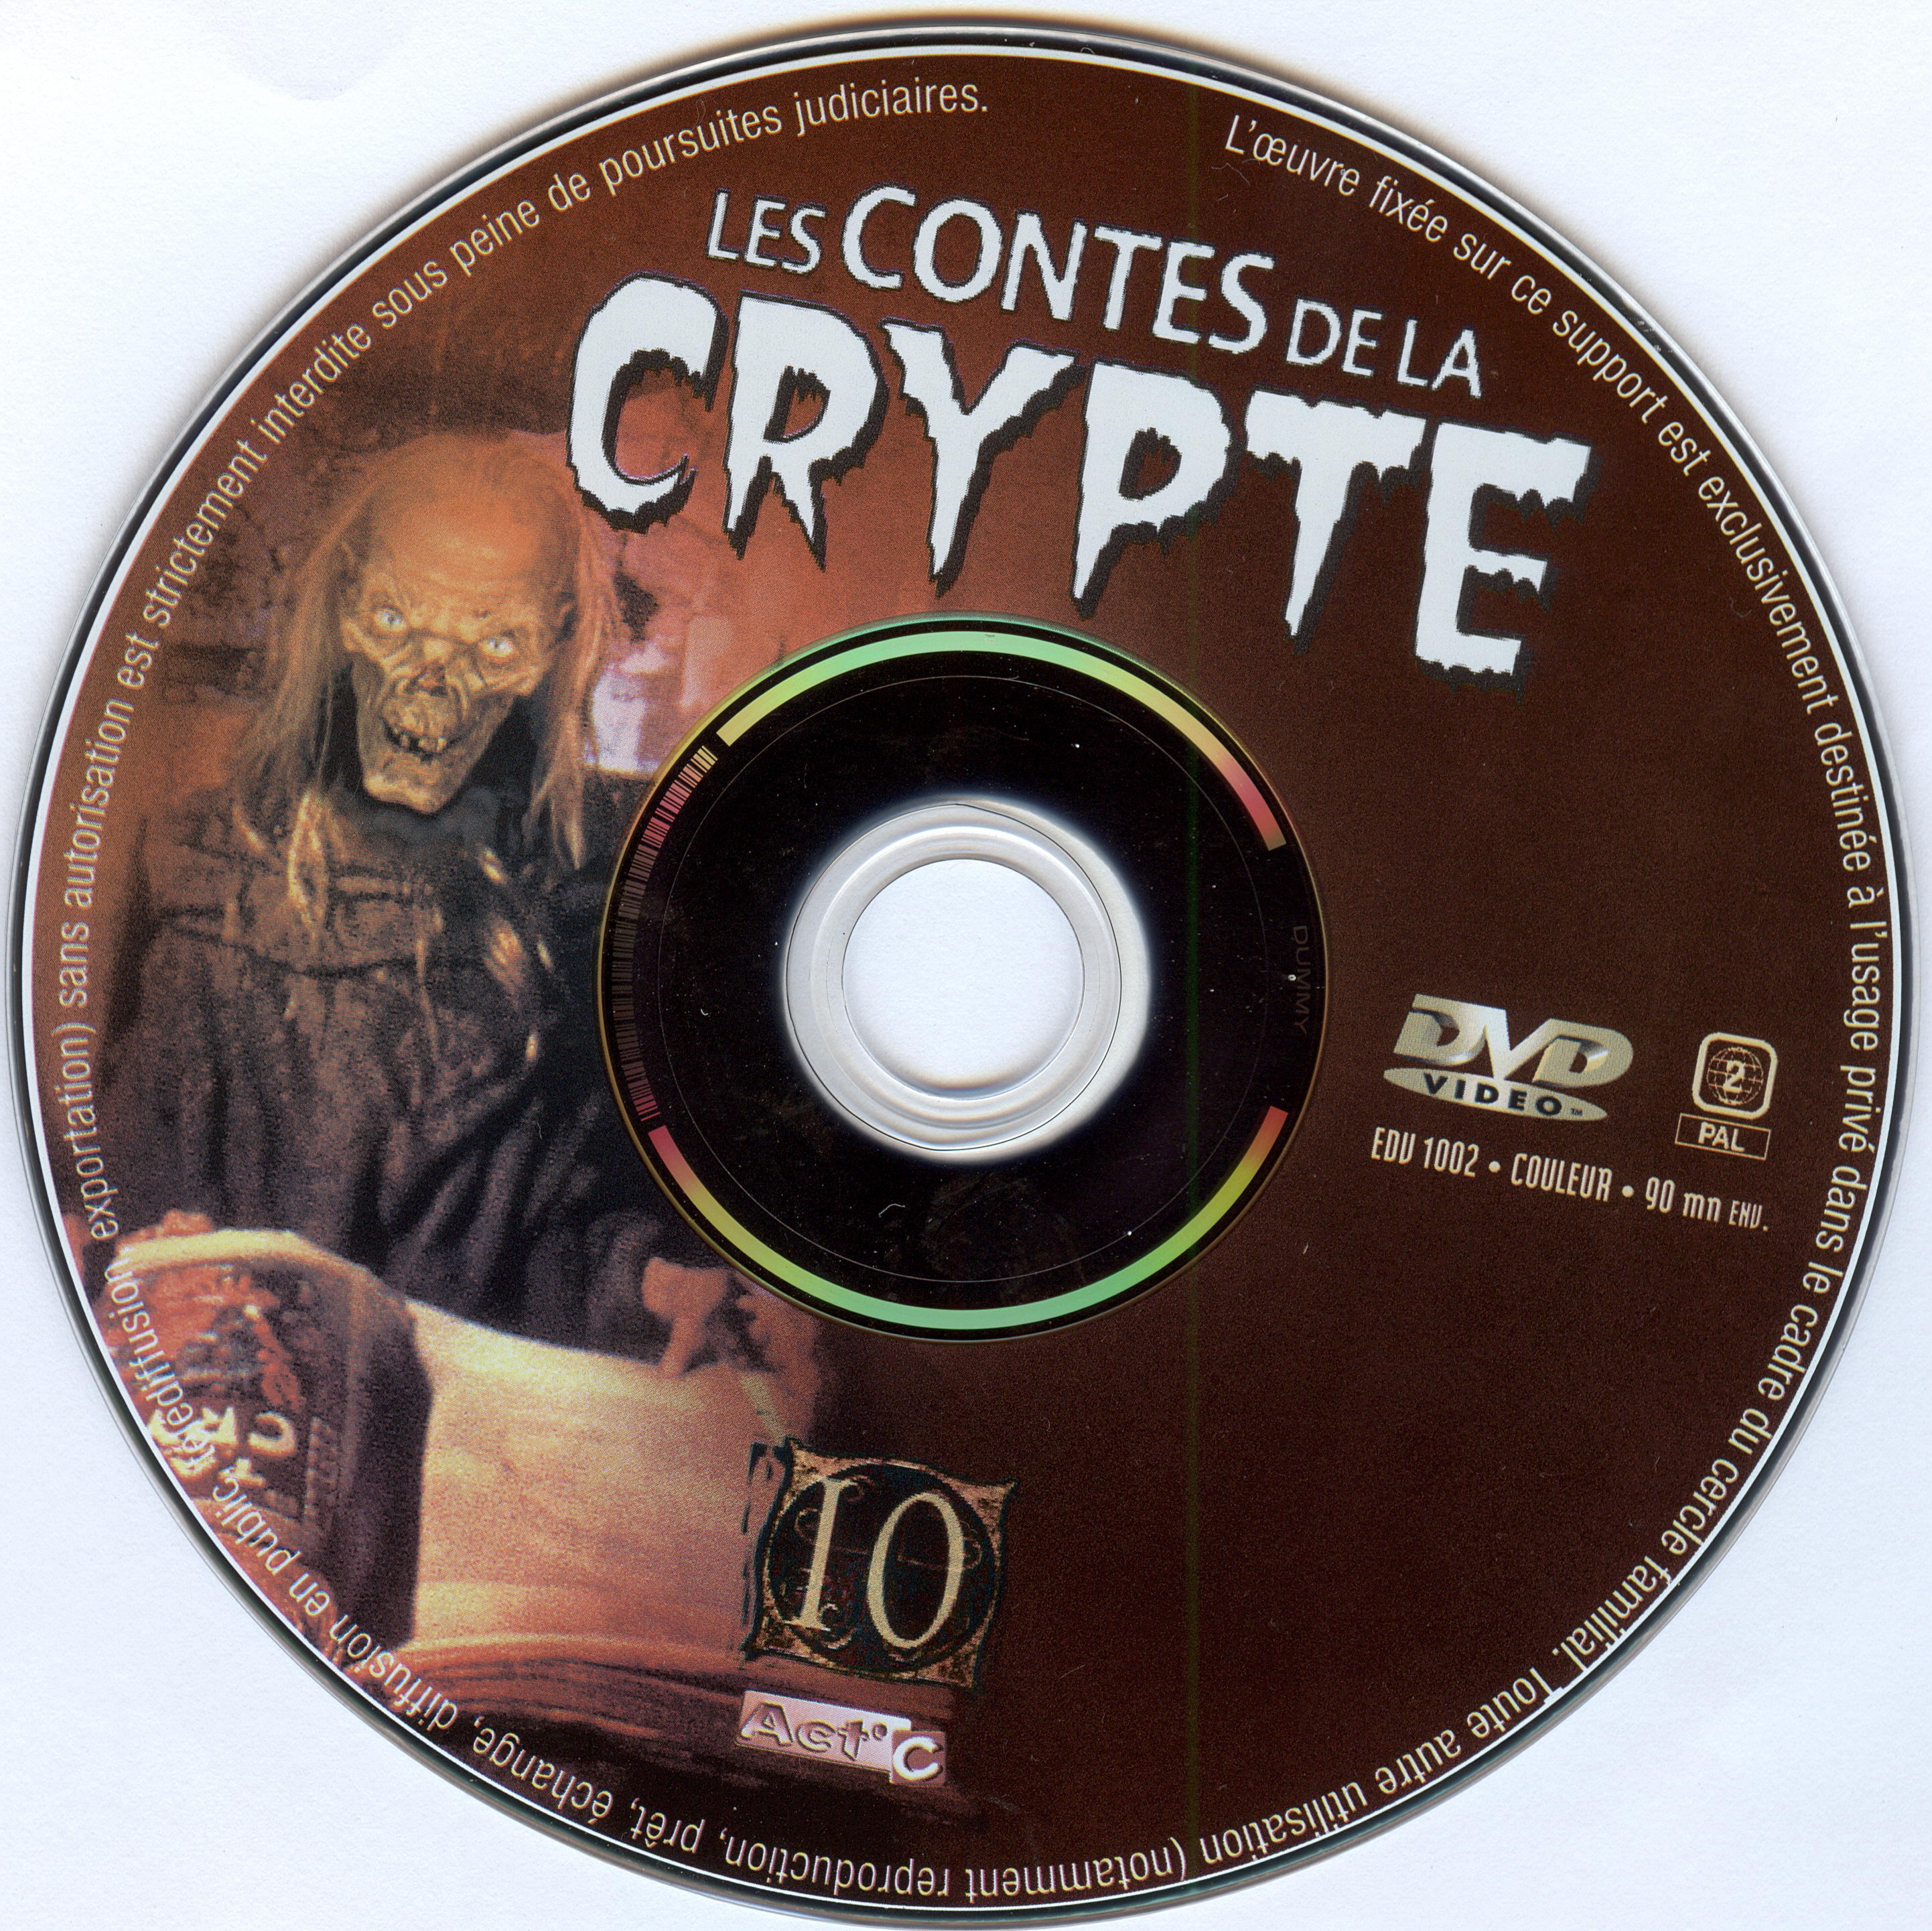 Les contes de la crypte vol 10